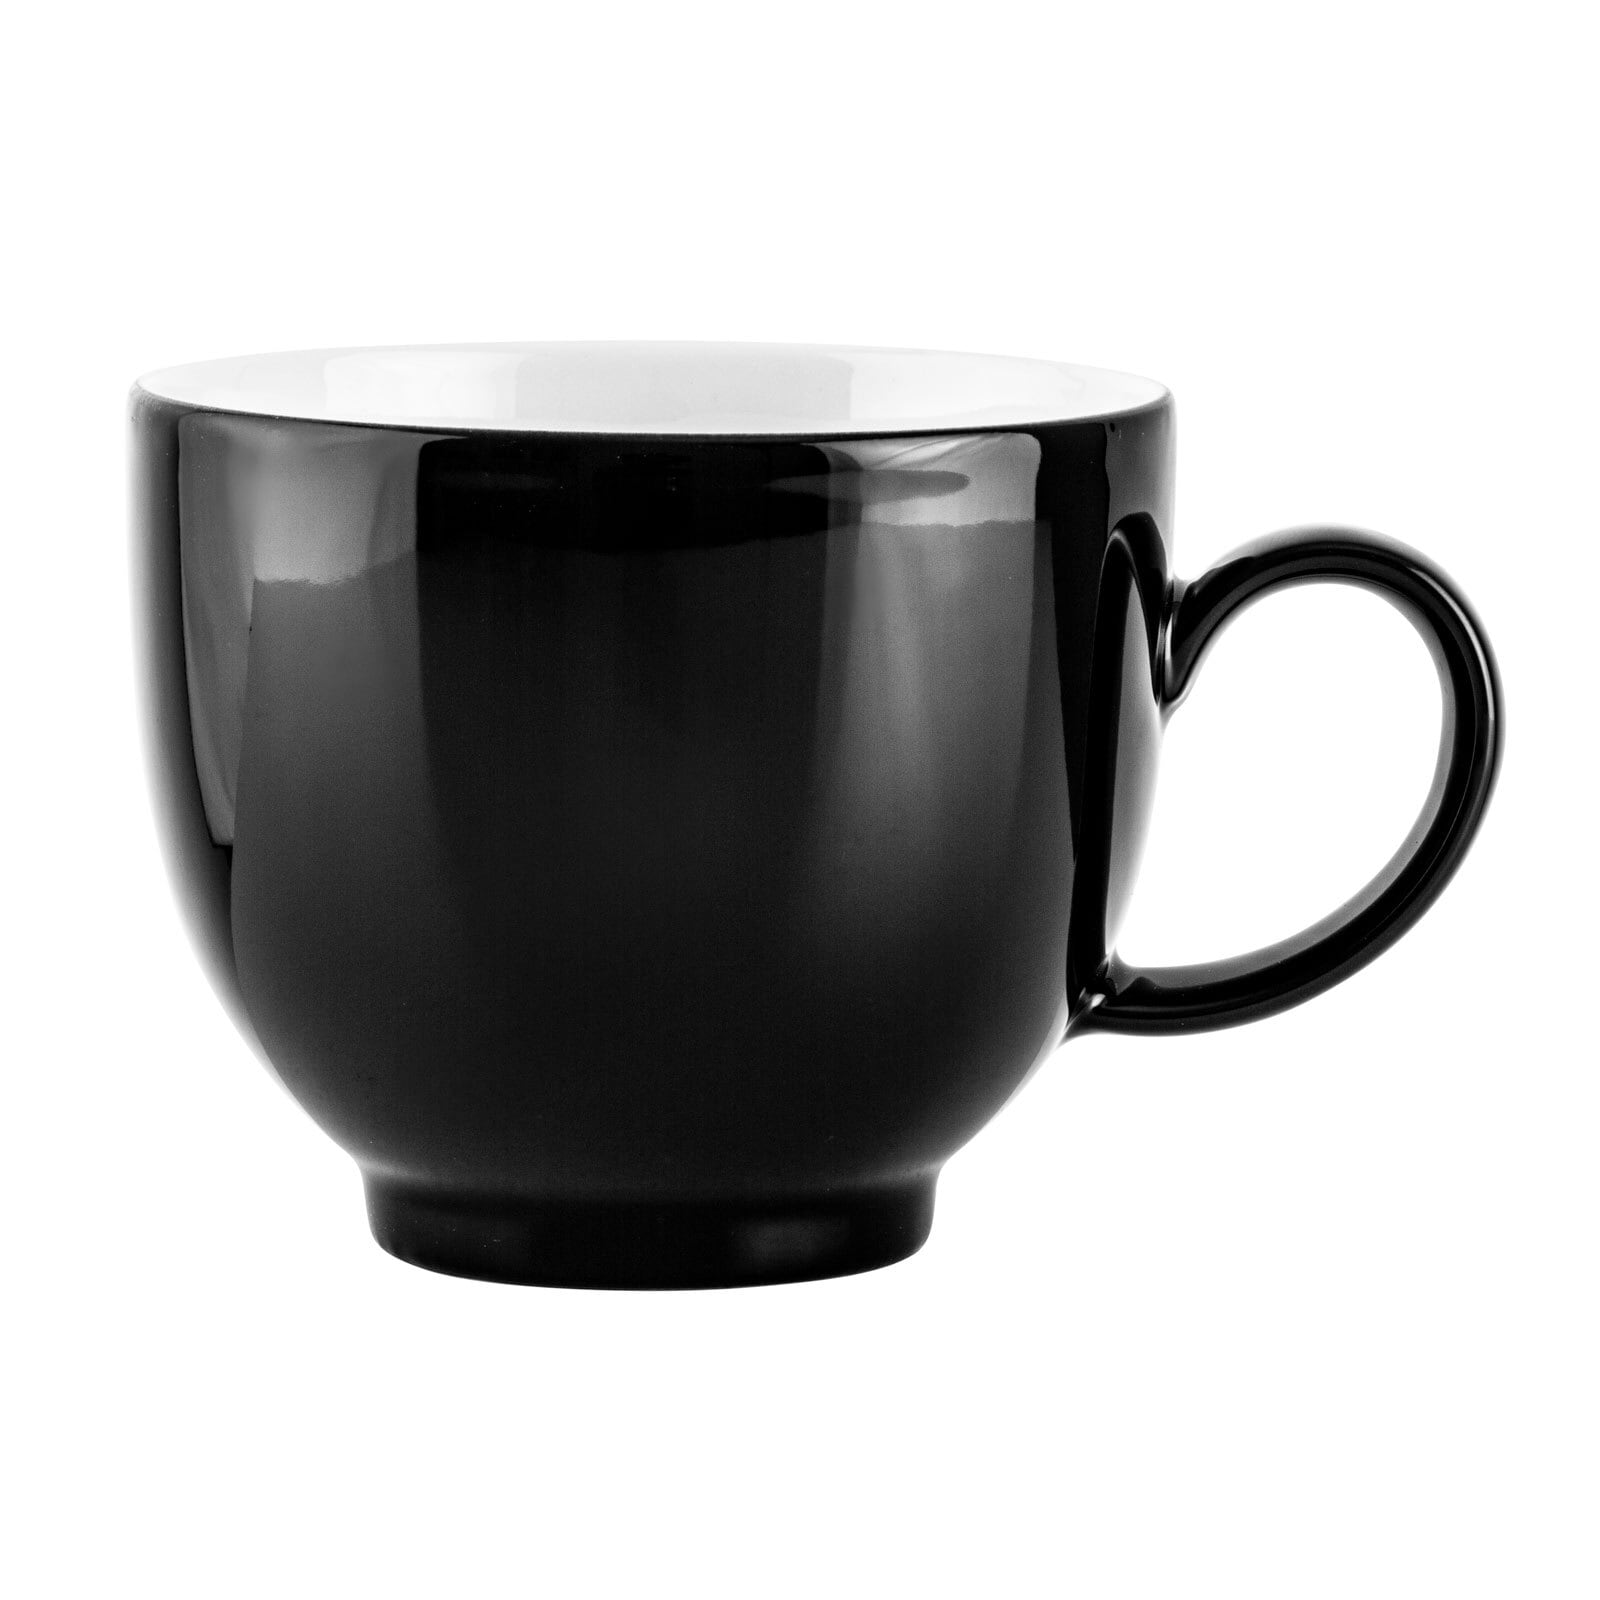 Seltmann Weiden Kaffeeservice LIDO SOLID BLACK 18-teilig schwarz/ weiß